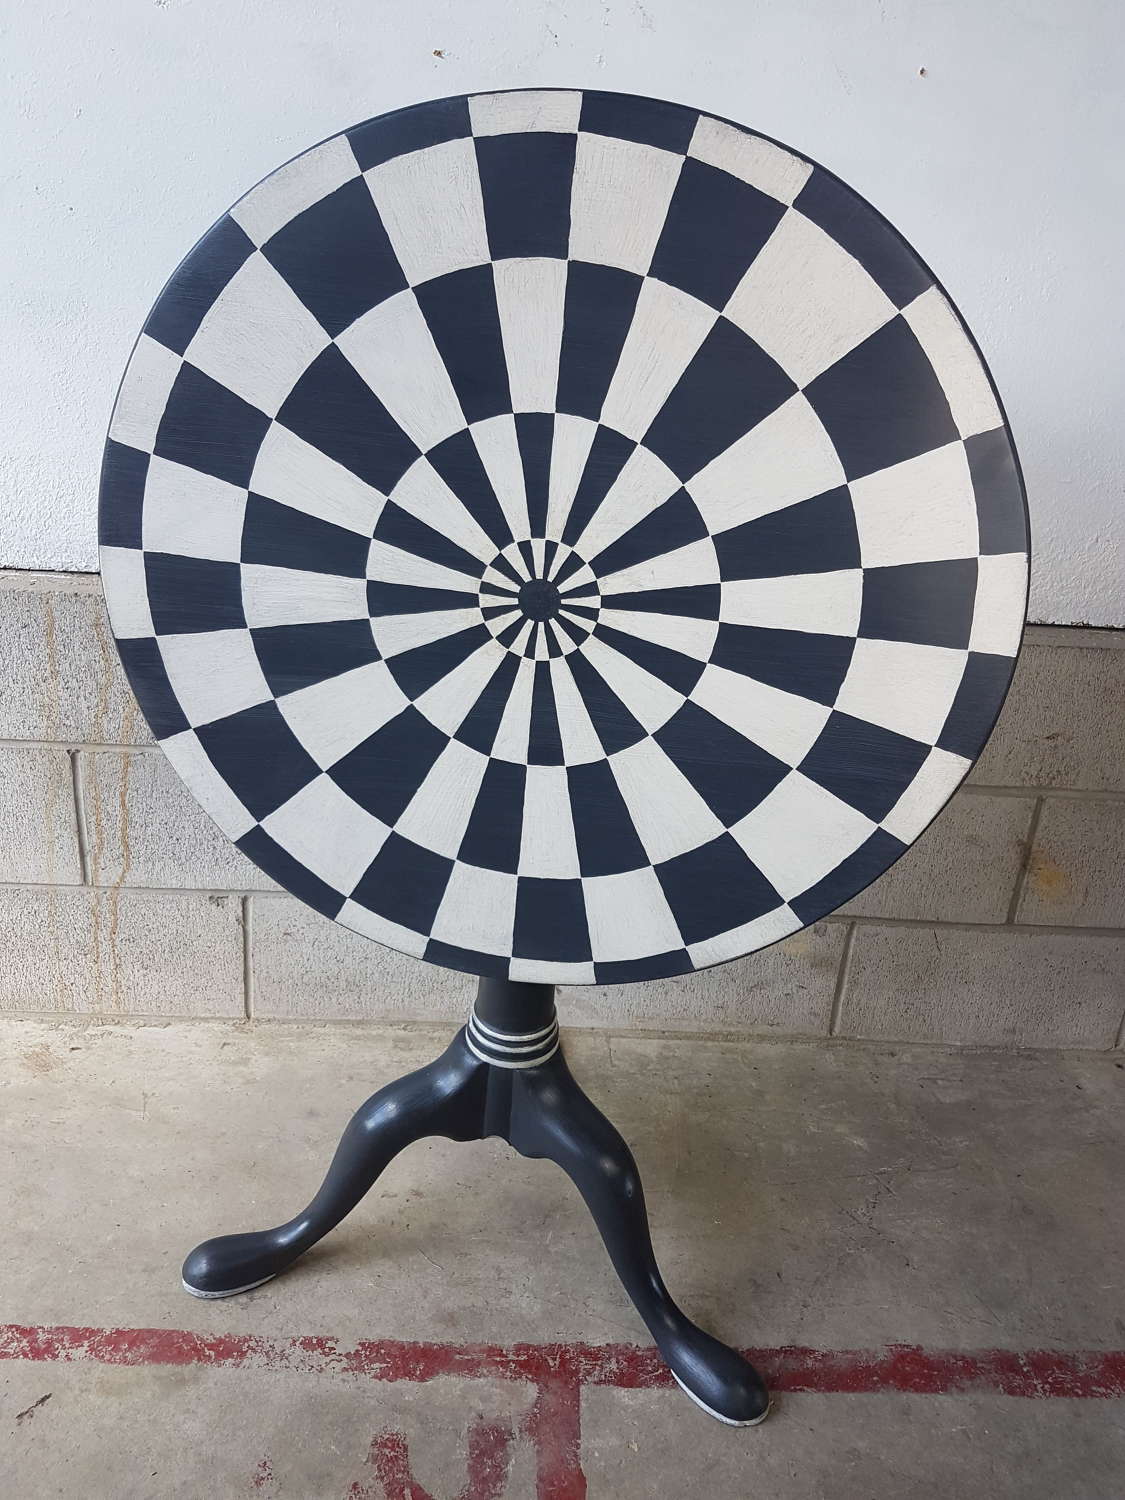 Painted Georgian tilt-top birdcage table in geometric pattern